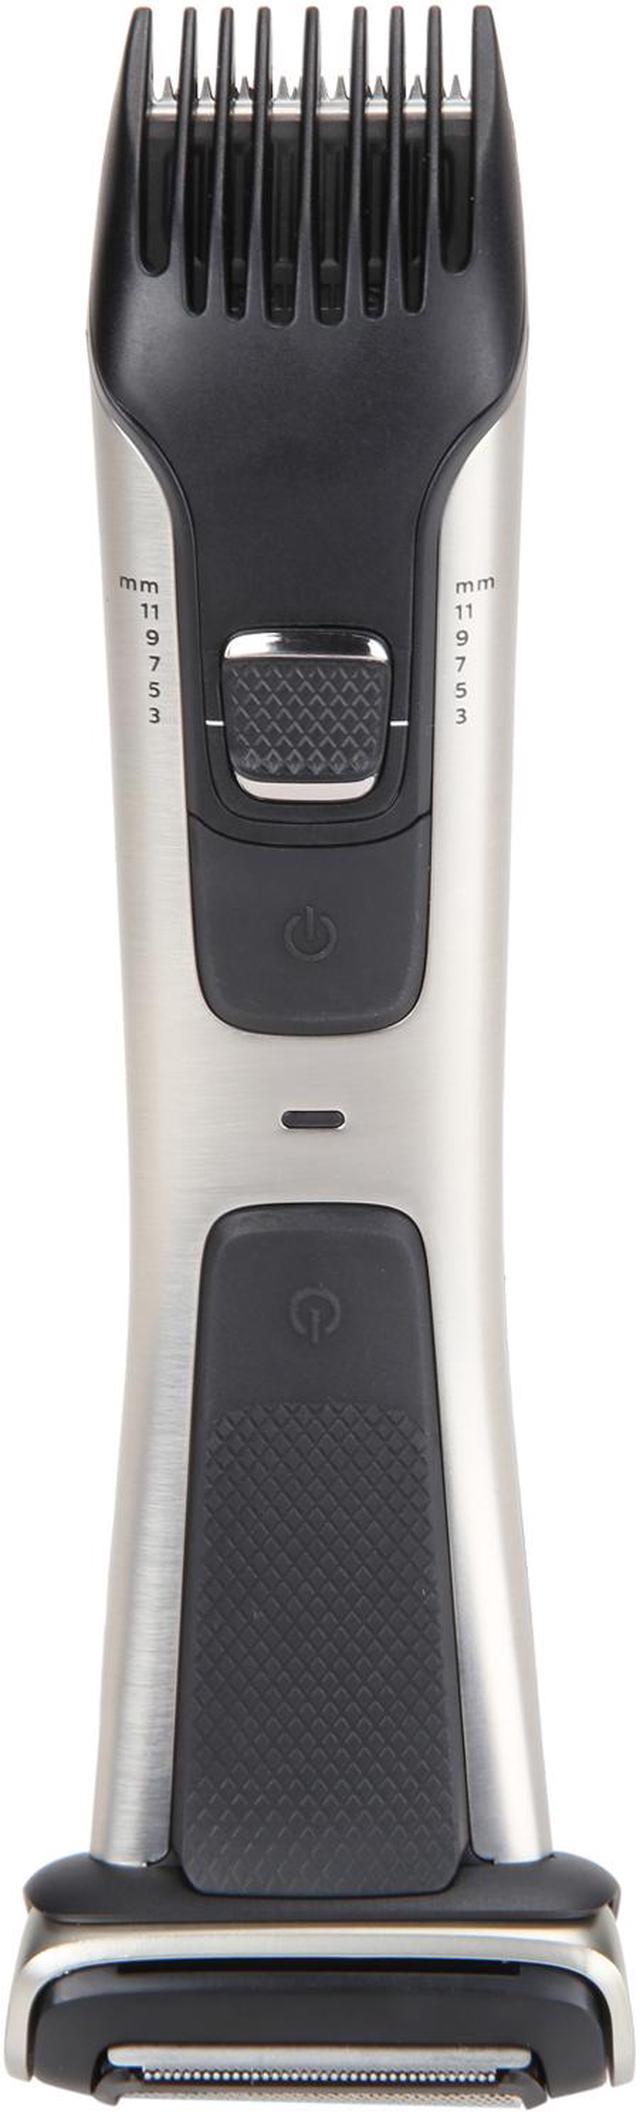 Philips Norelco Bodygroom Series 7000 (BG7030/49) Showerproof Dual